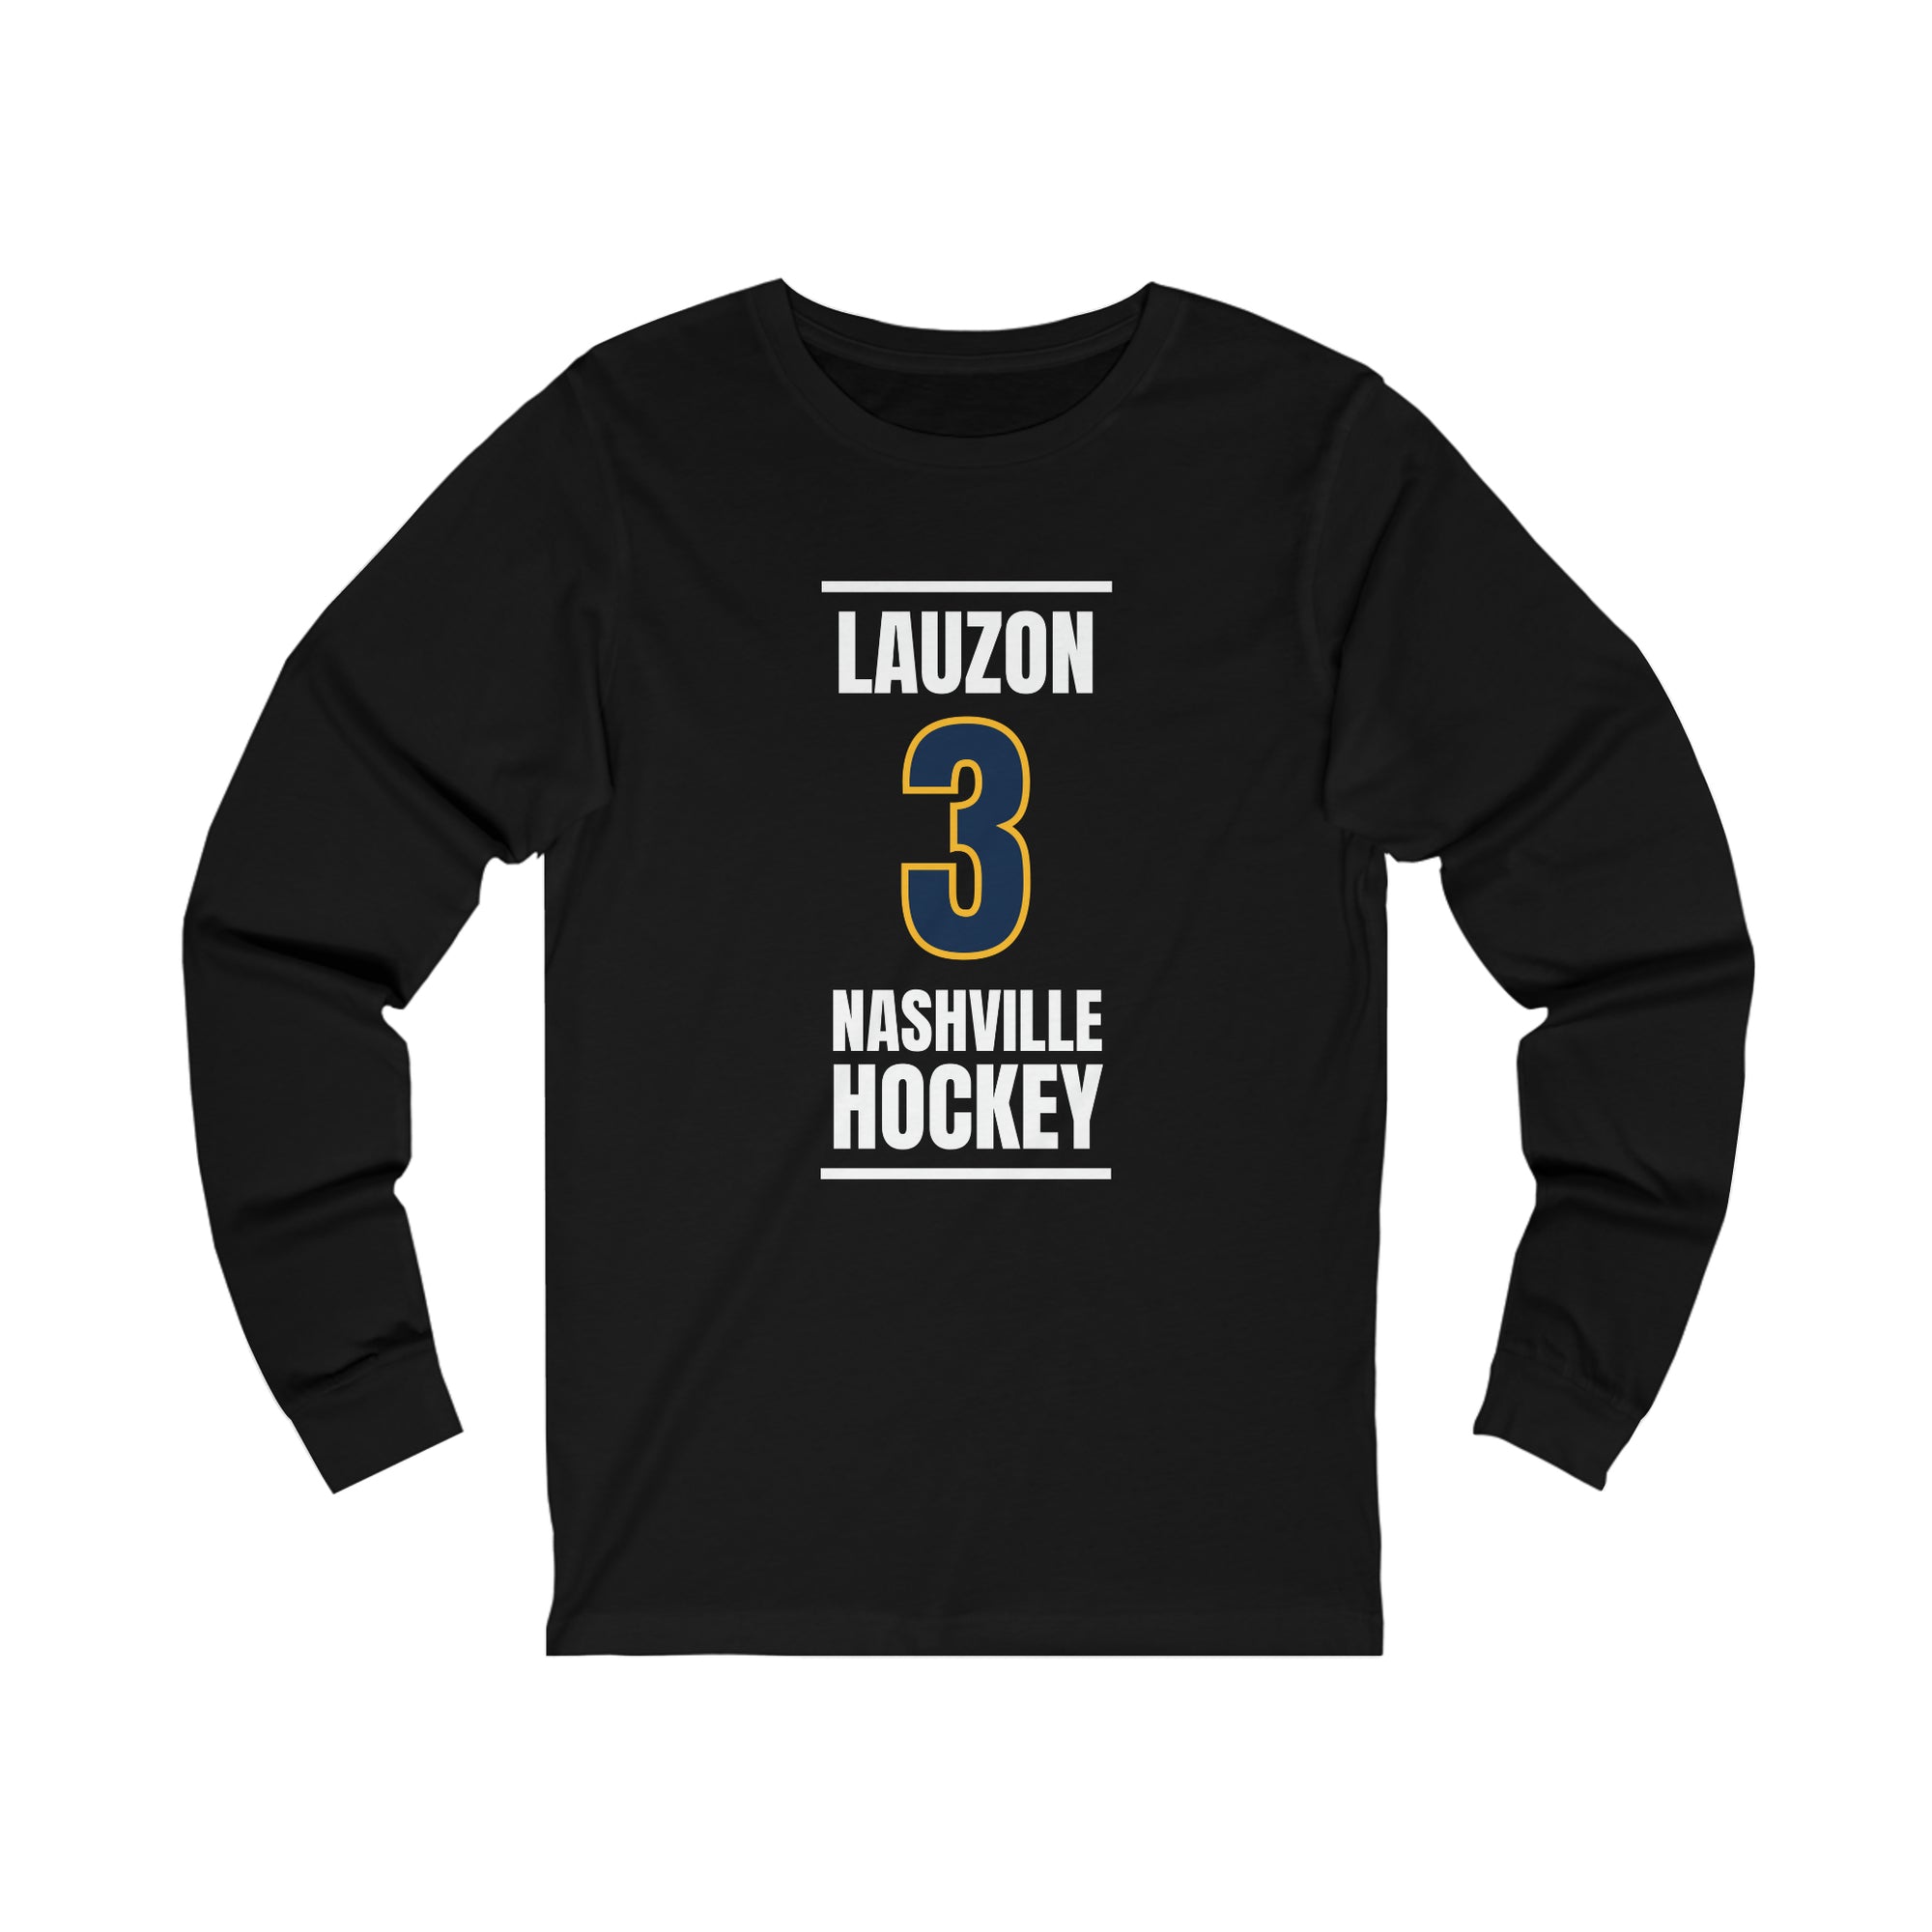 Lauzon 3 Nashville Hockey Navy Blue Vertical Design Unisex Jersey Long Sleeve Shirt